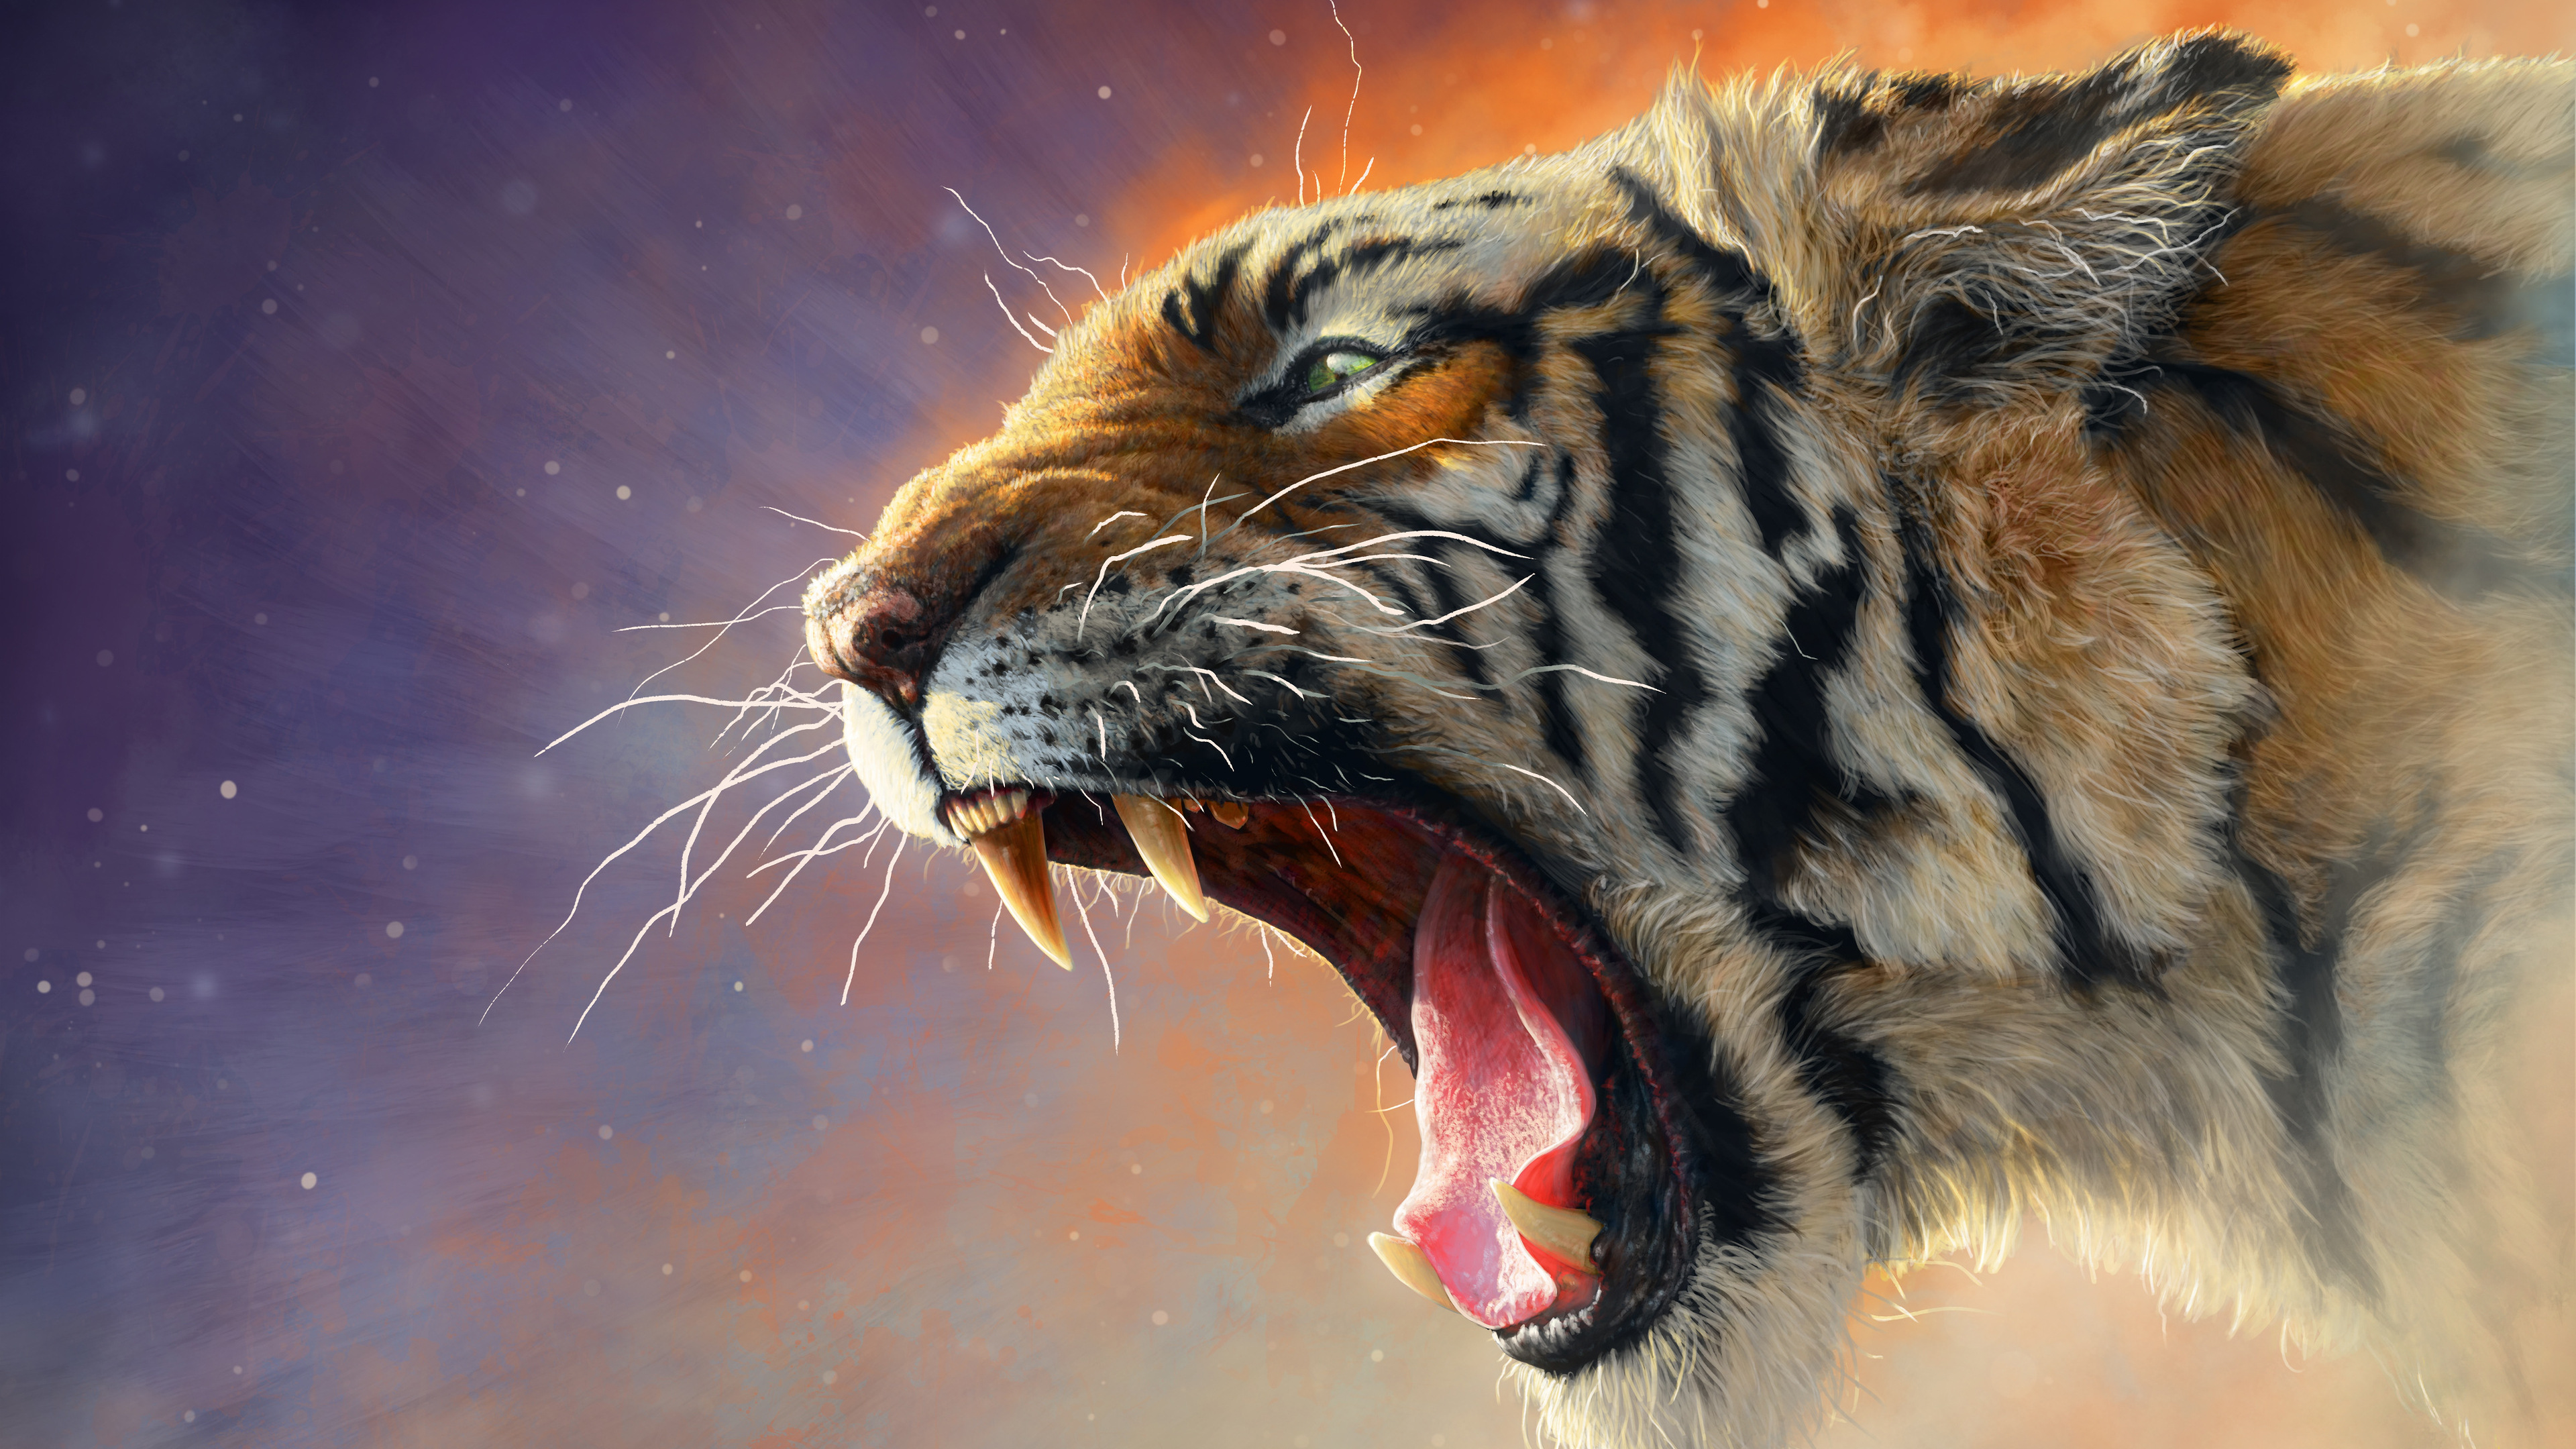 Tiger 4k Ultra HD Wallpaper